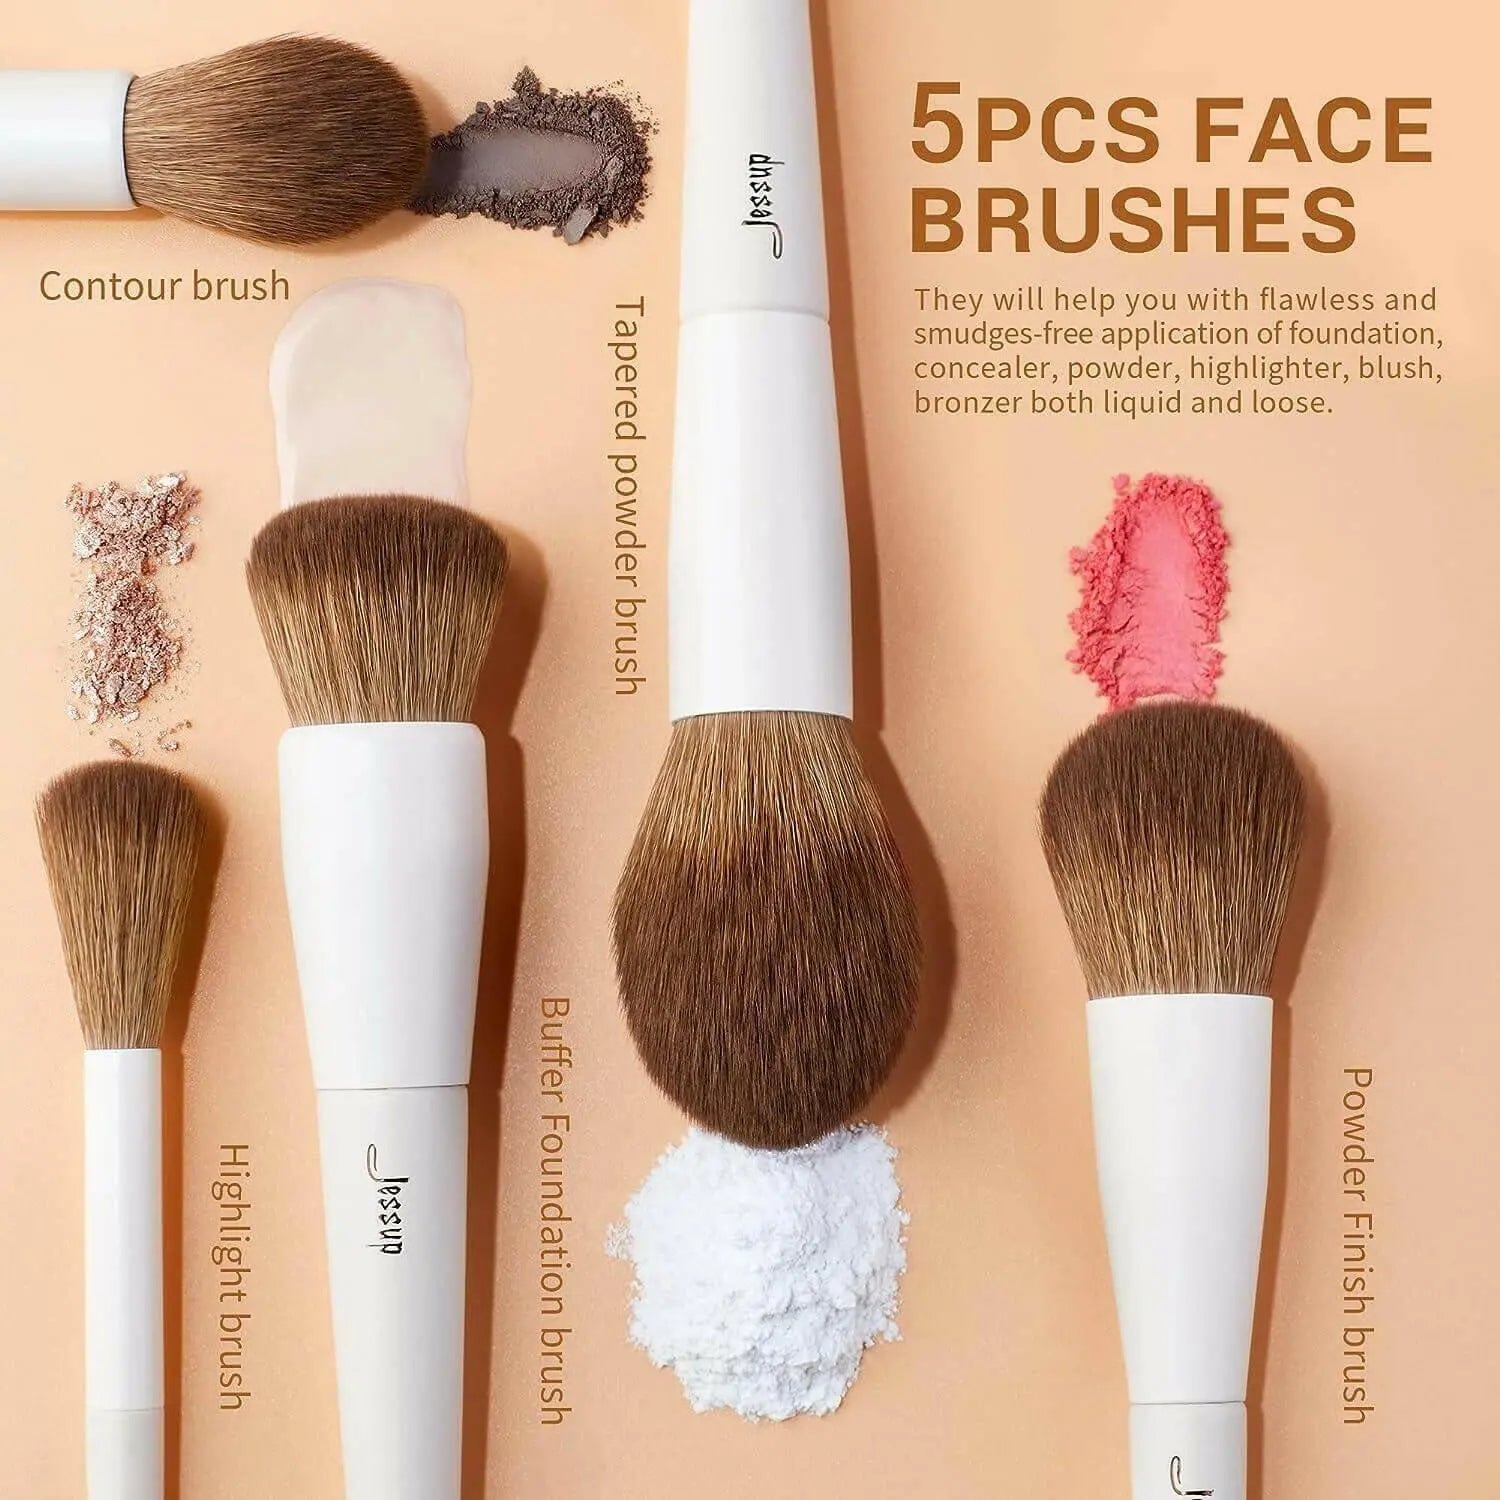 14pc Vegan Makeup Brush Set | Professional